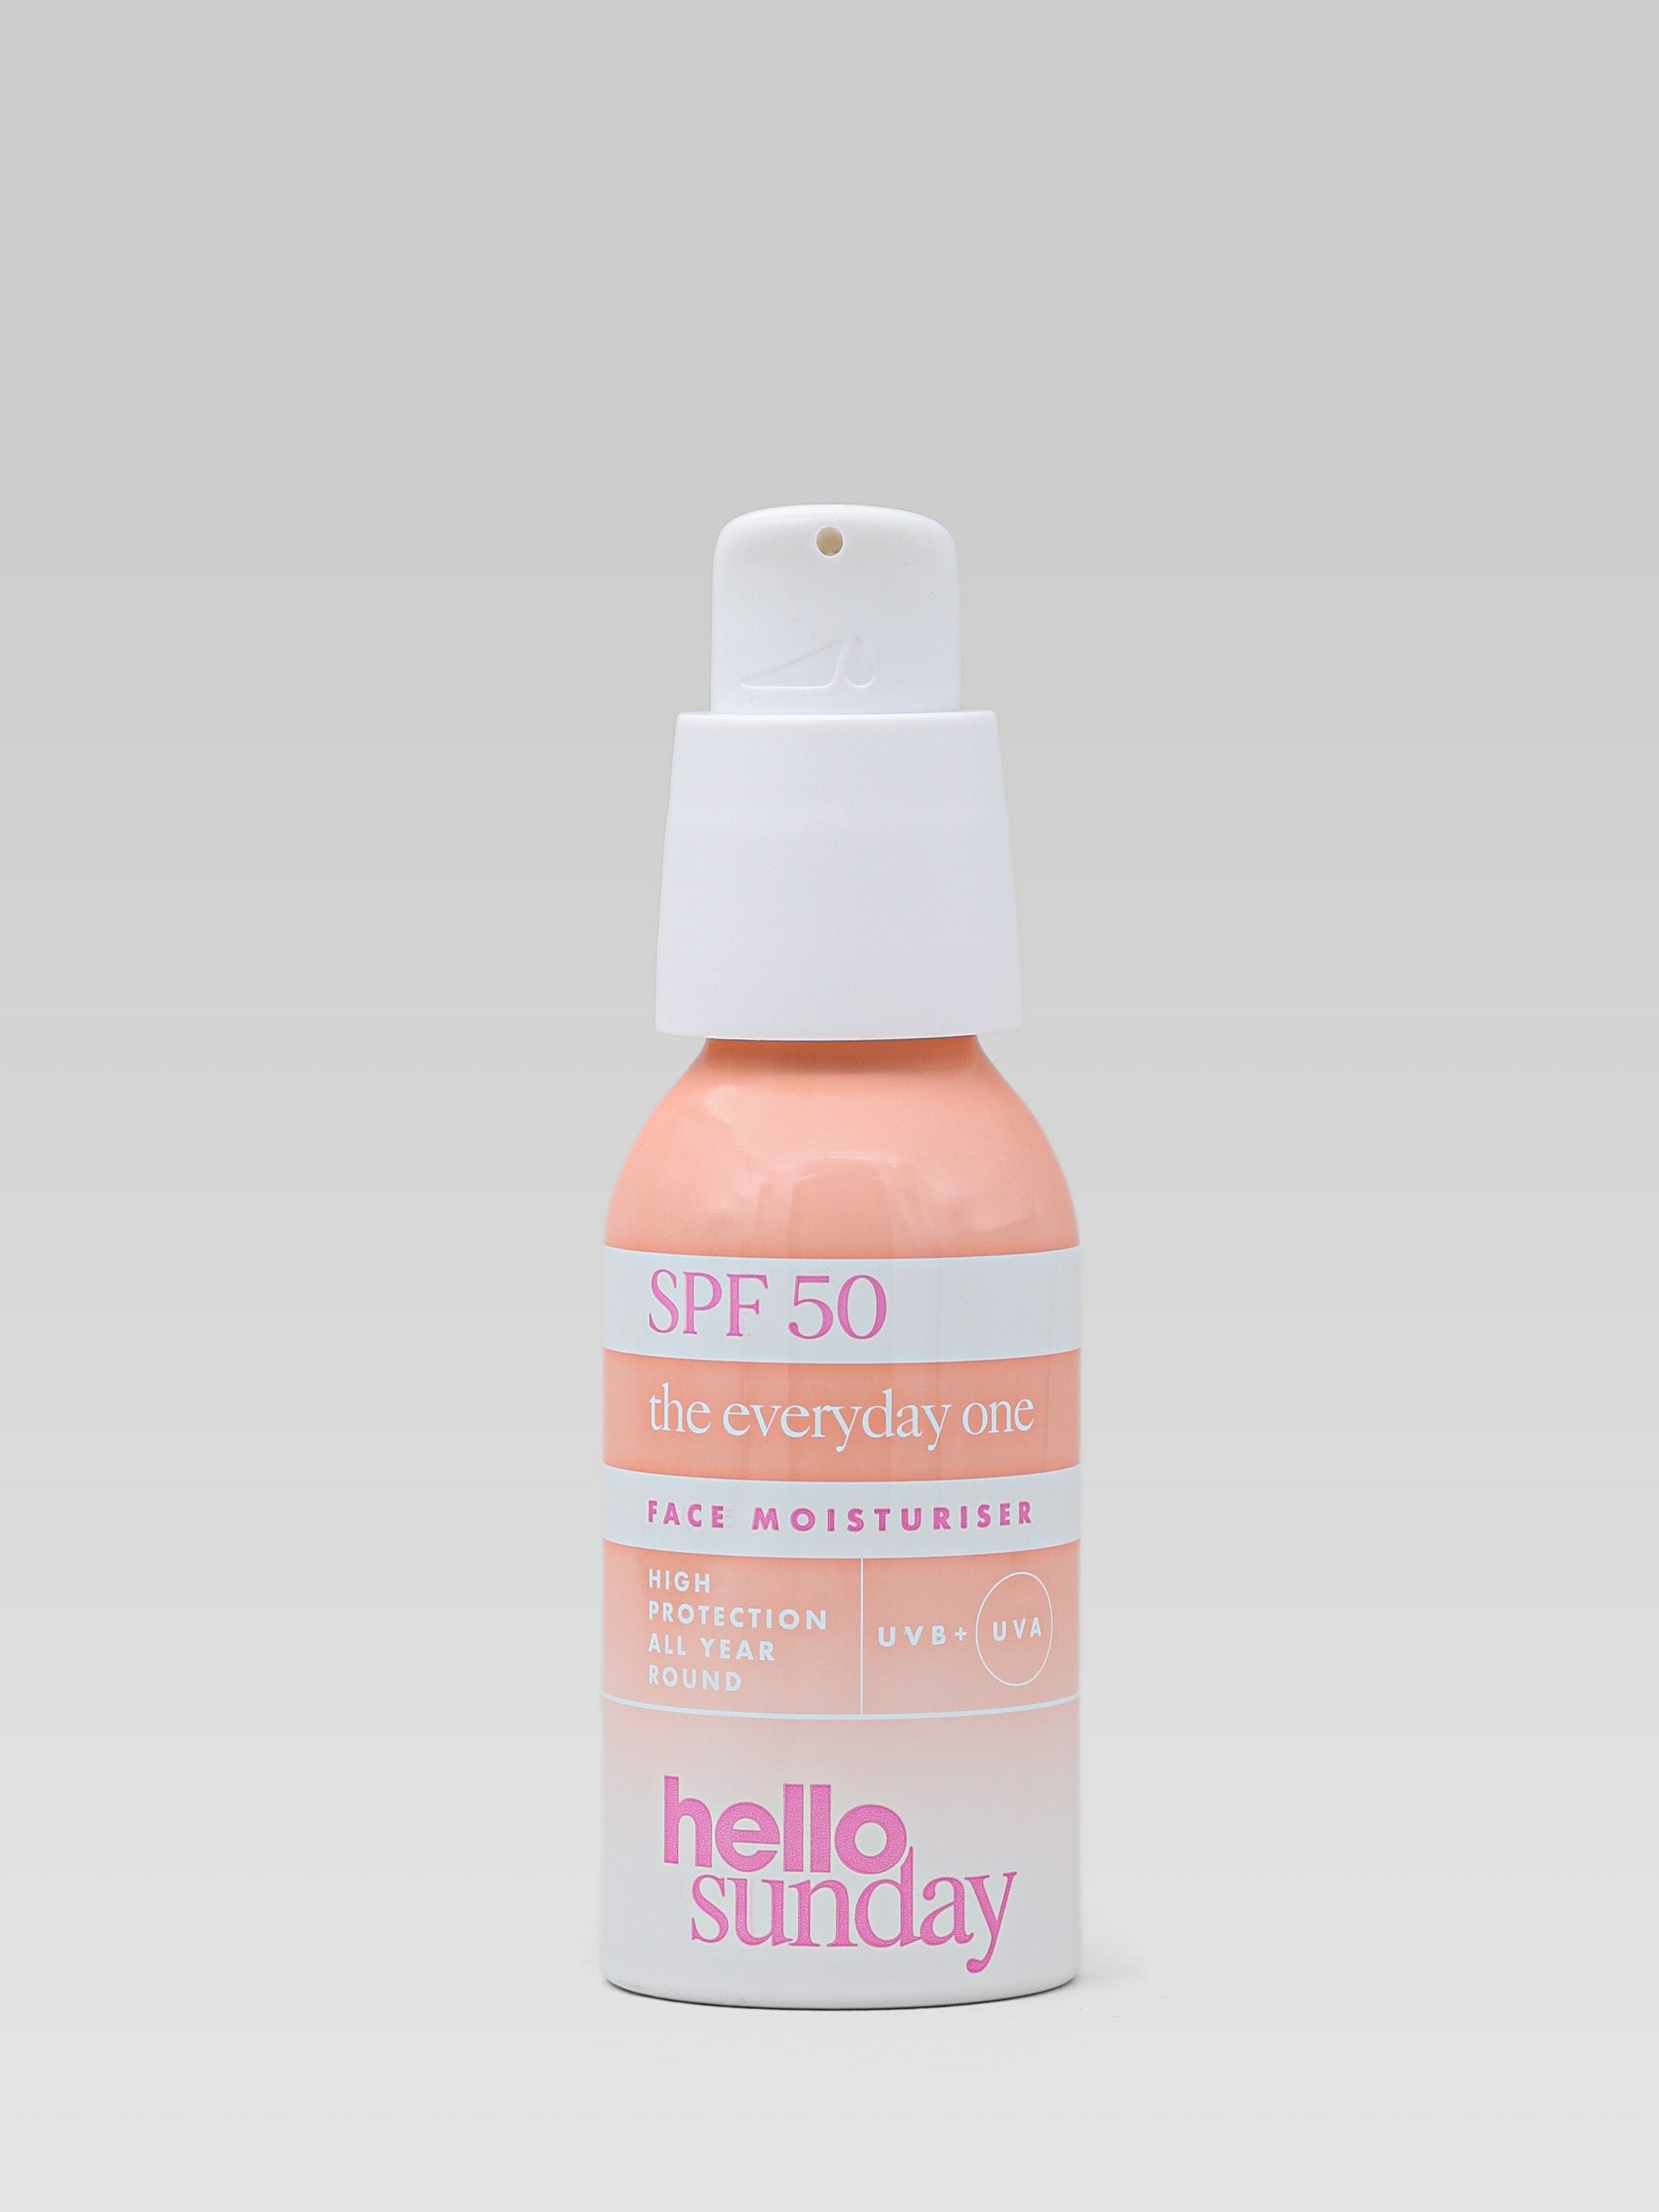 HELLO SUNDAY The Everyday One SPF 50 Face Moisturiser product shot 